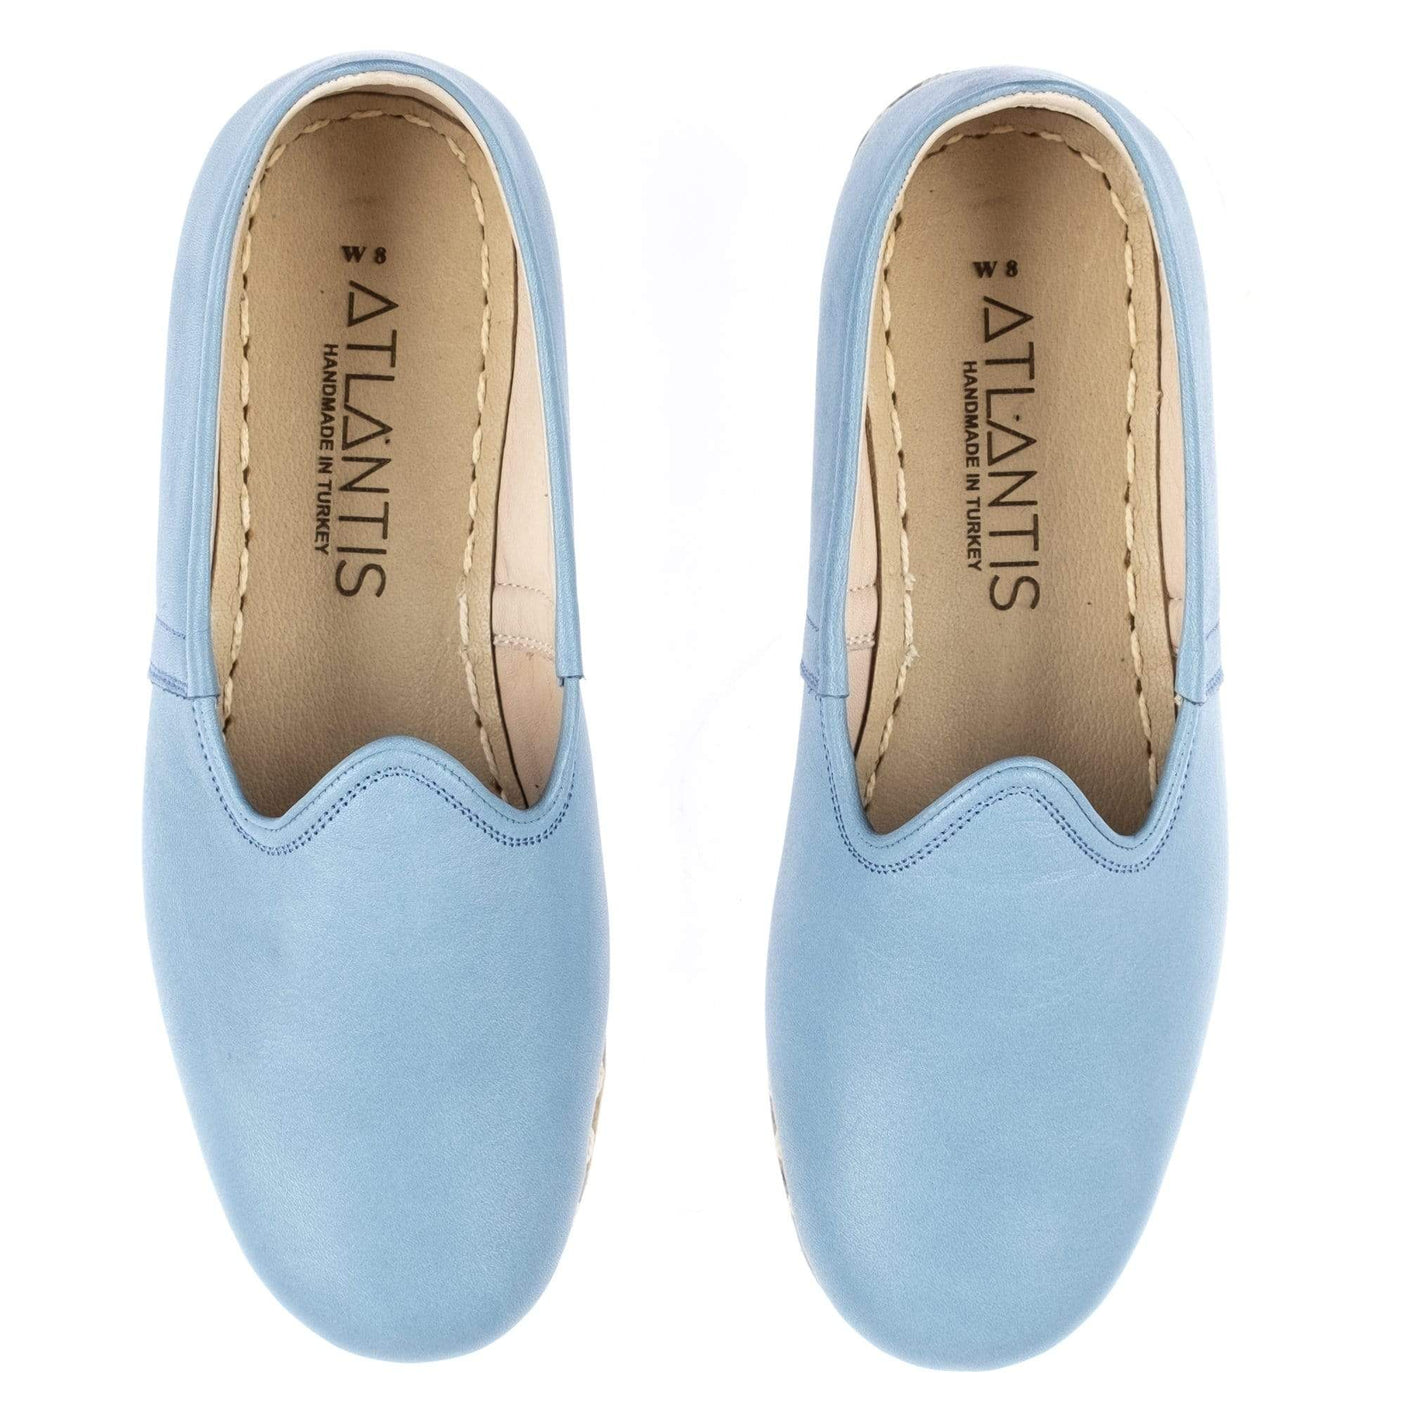 Women's Sky Blue Slip On Shoes